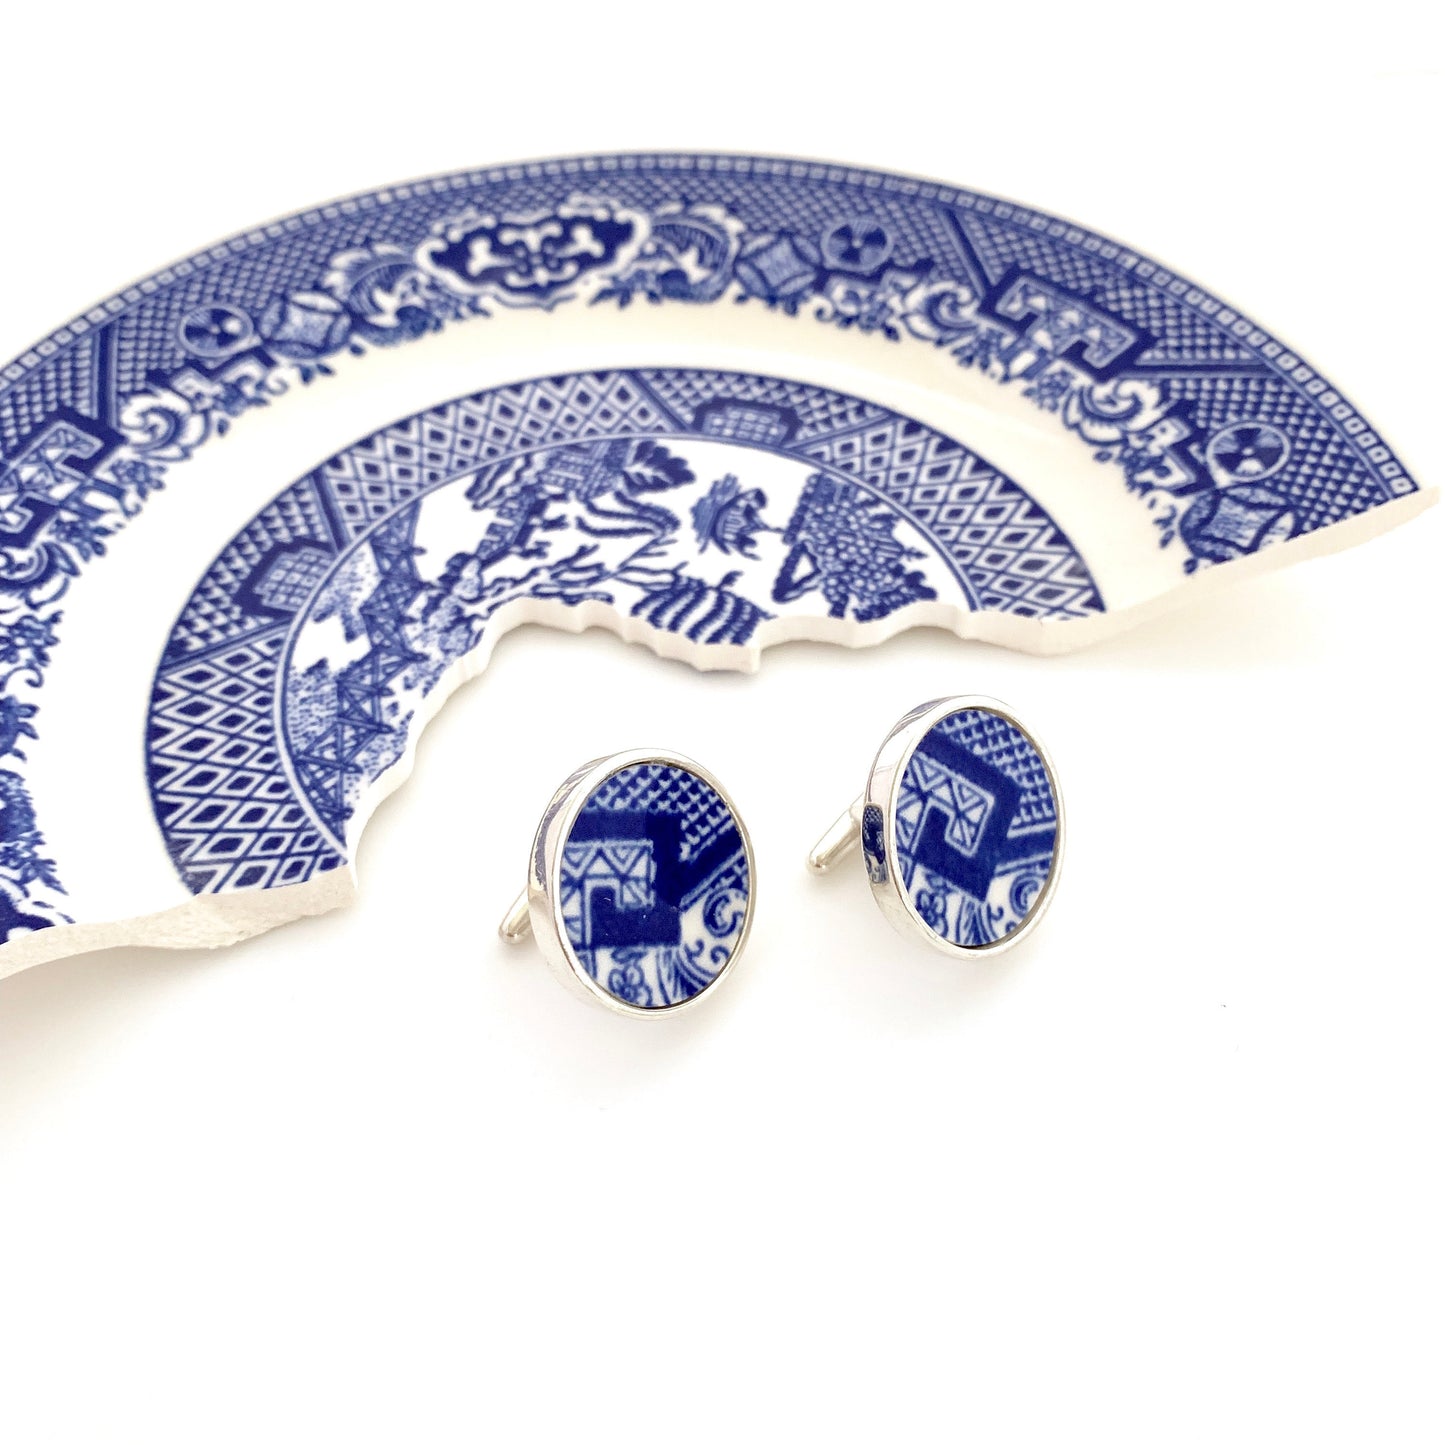 CUSTOM ORDER China Cufflinks Broken China Jewelry Cuff Links Made From Your China Memorial Jewelry Custom Jewelry